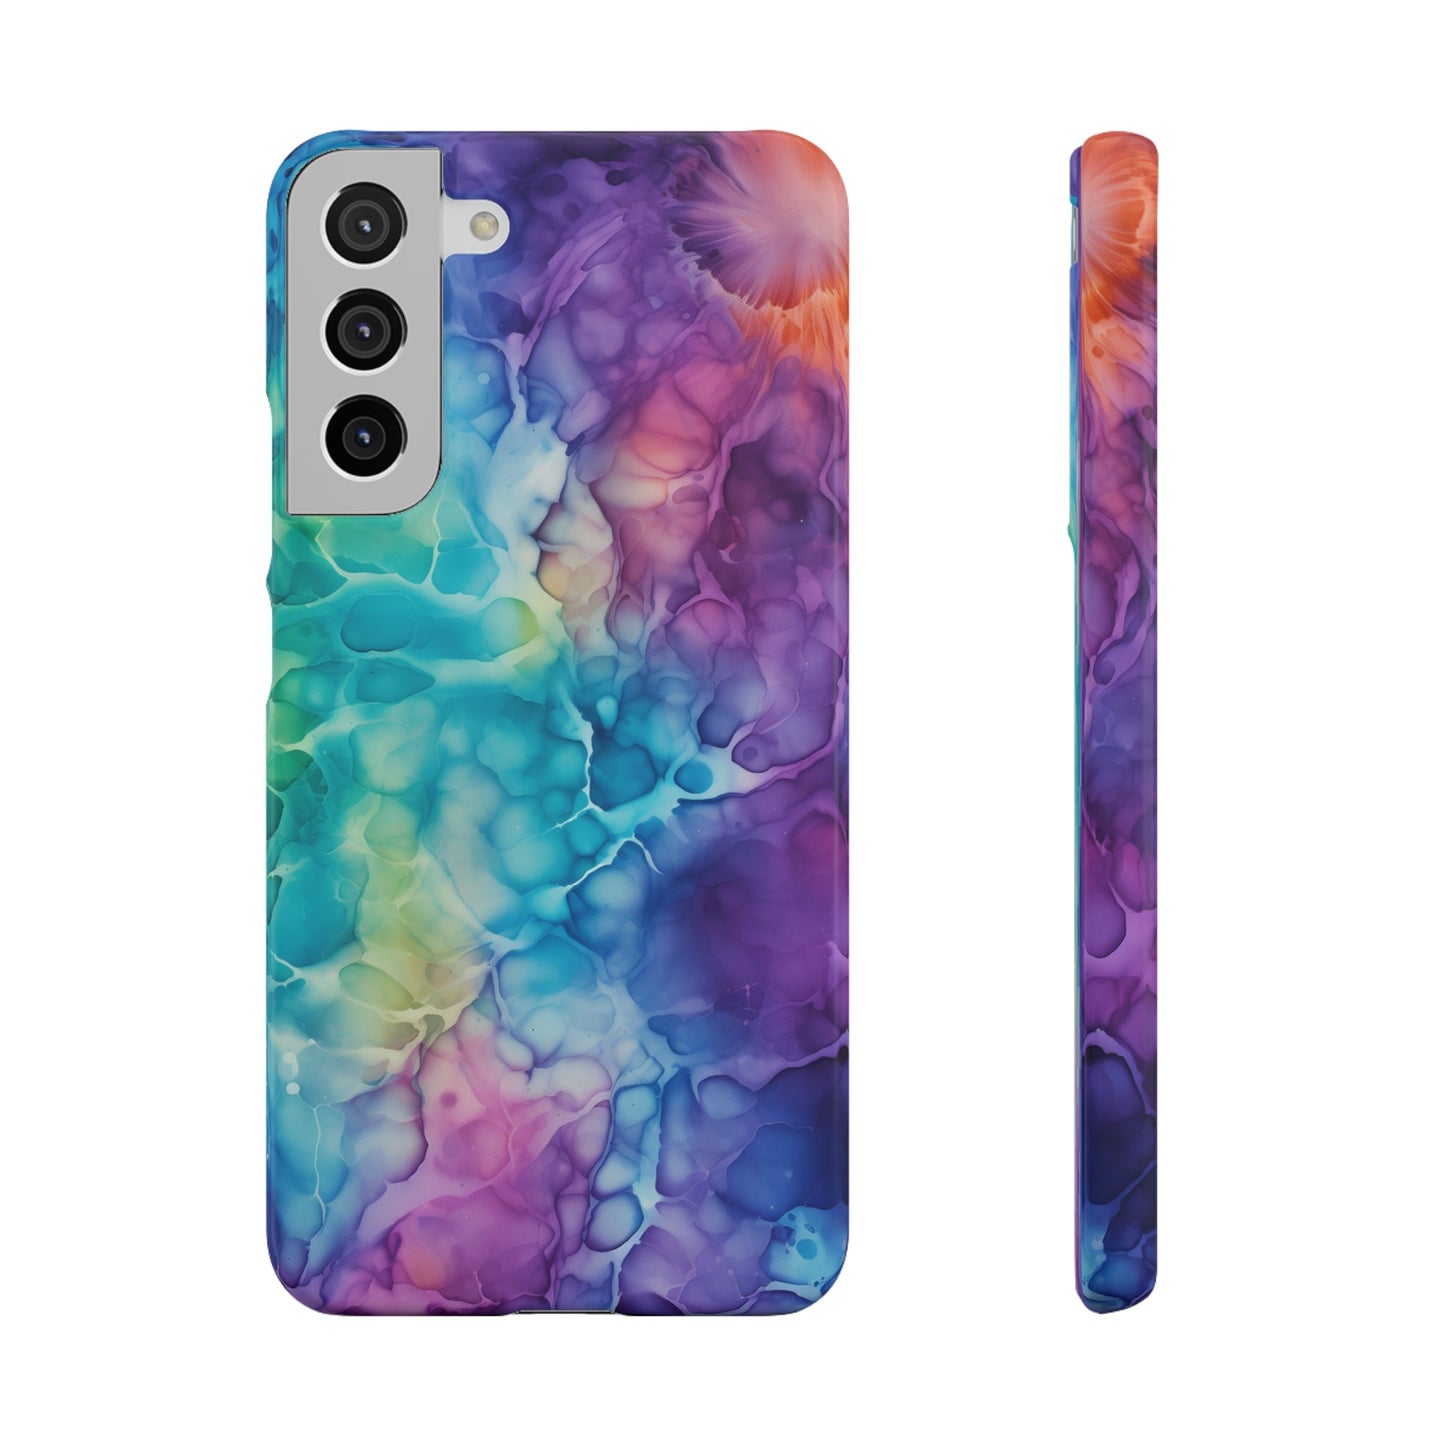 Nebula Fusion | Snap Case